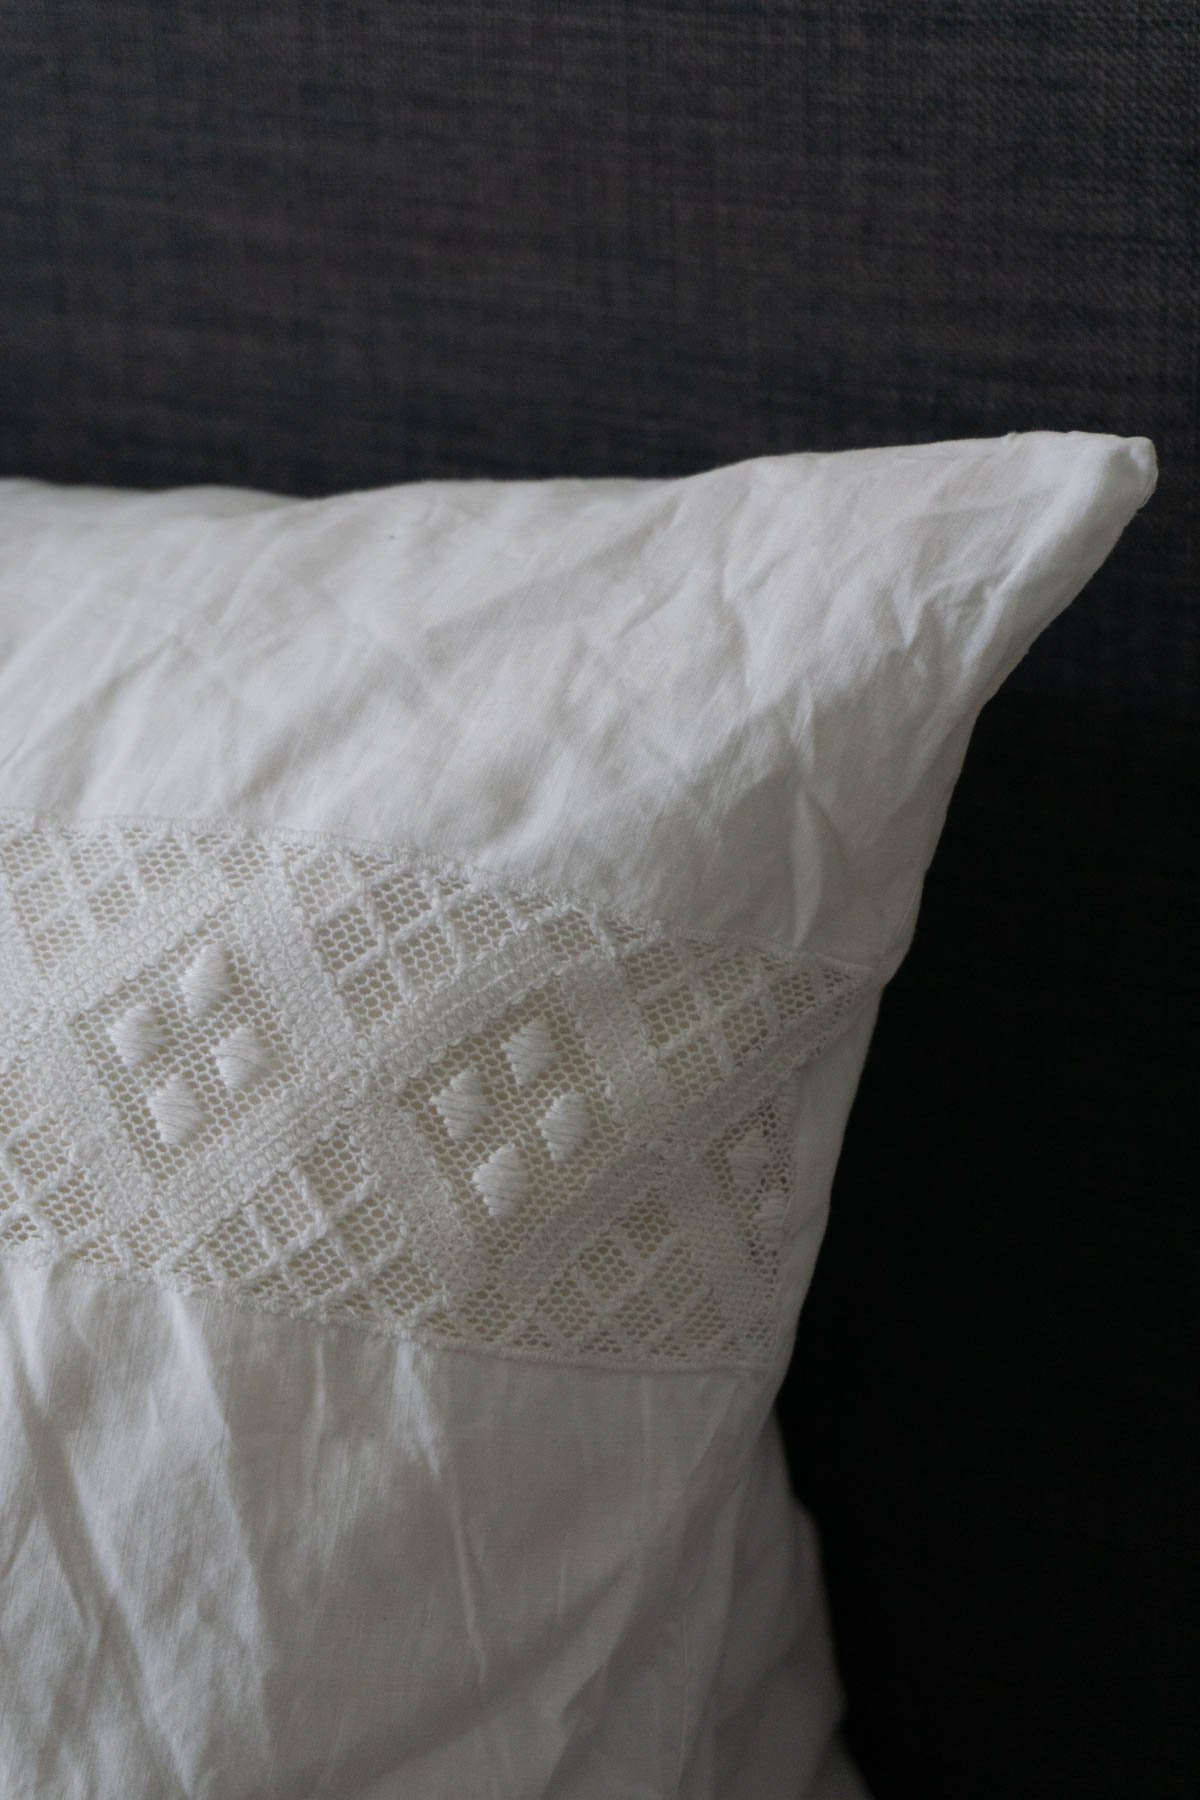 Calming Scandinavian Bedroom Details - Vintage Bedding Grey and White - RG Daily Blog